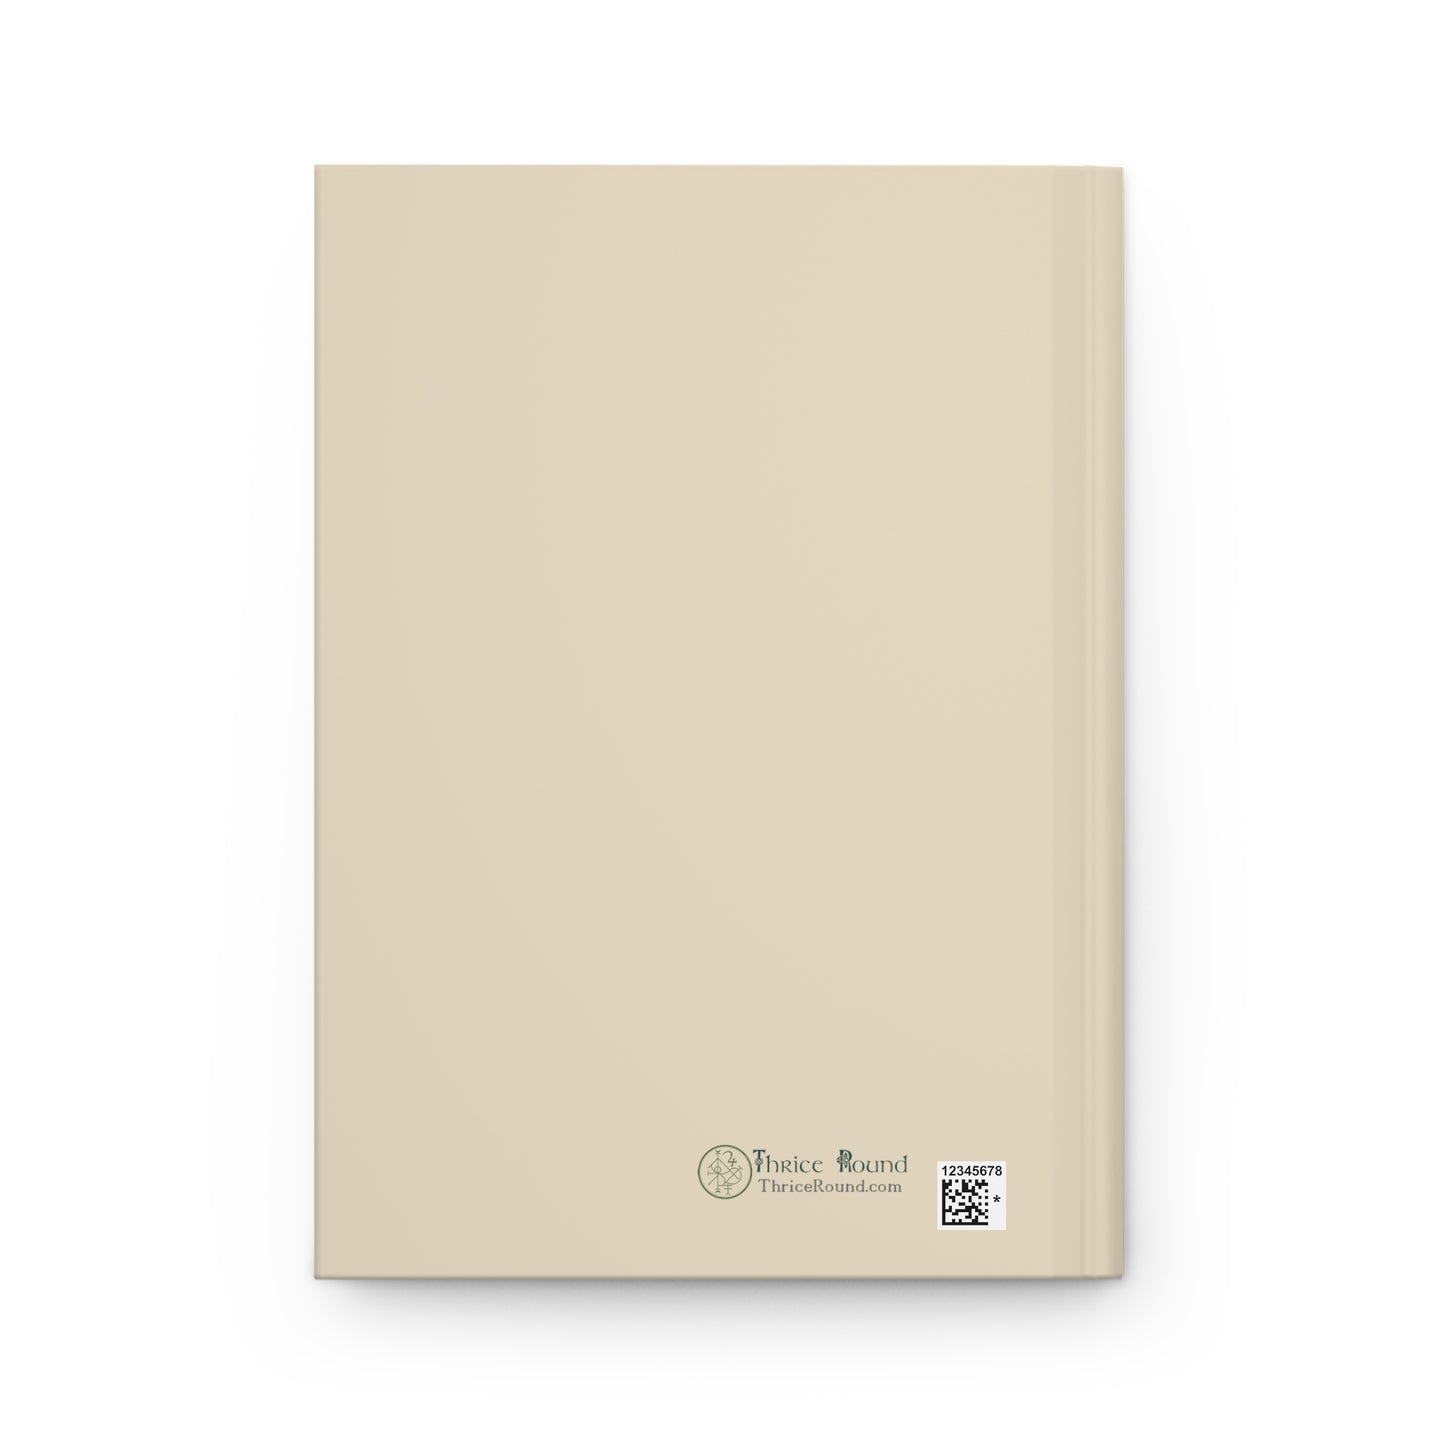 The Sun Tarot Hardcover Notebook - Tarot journal